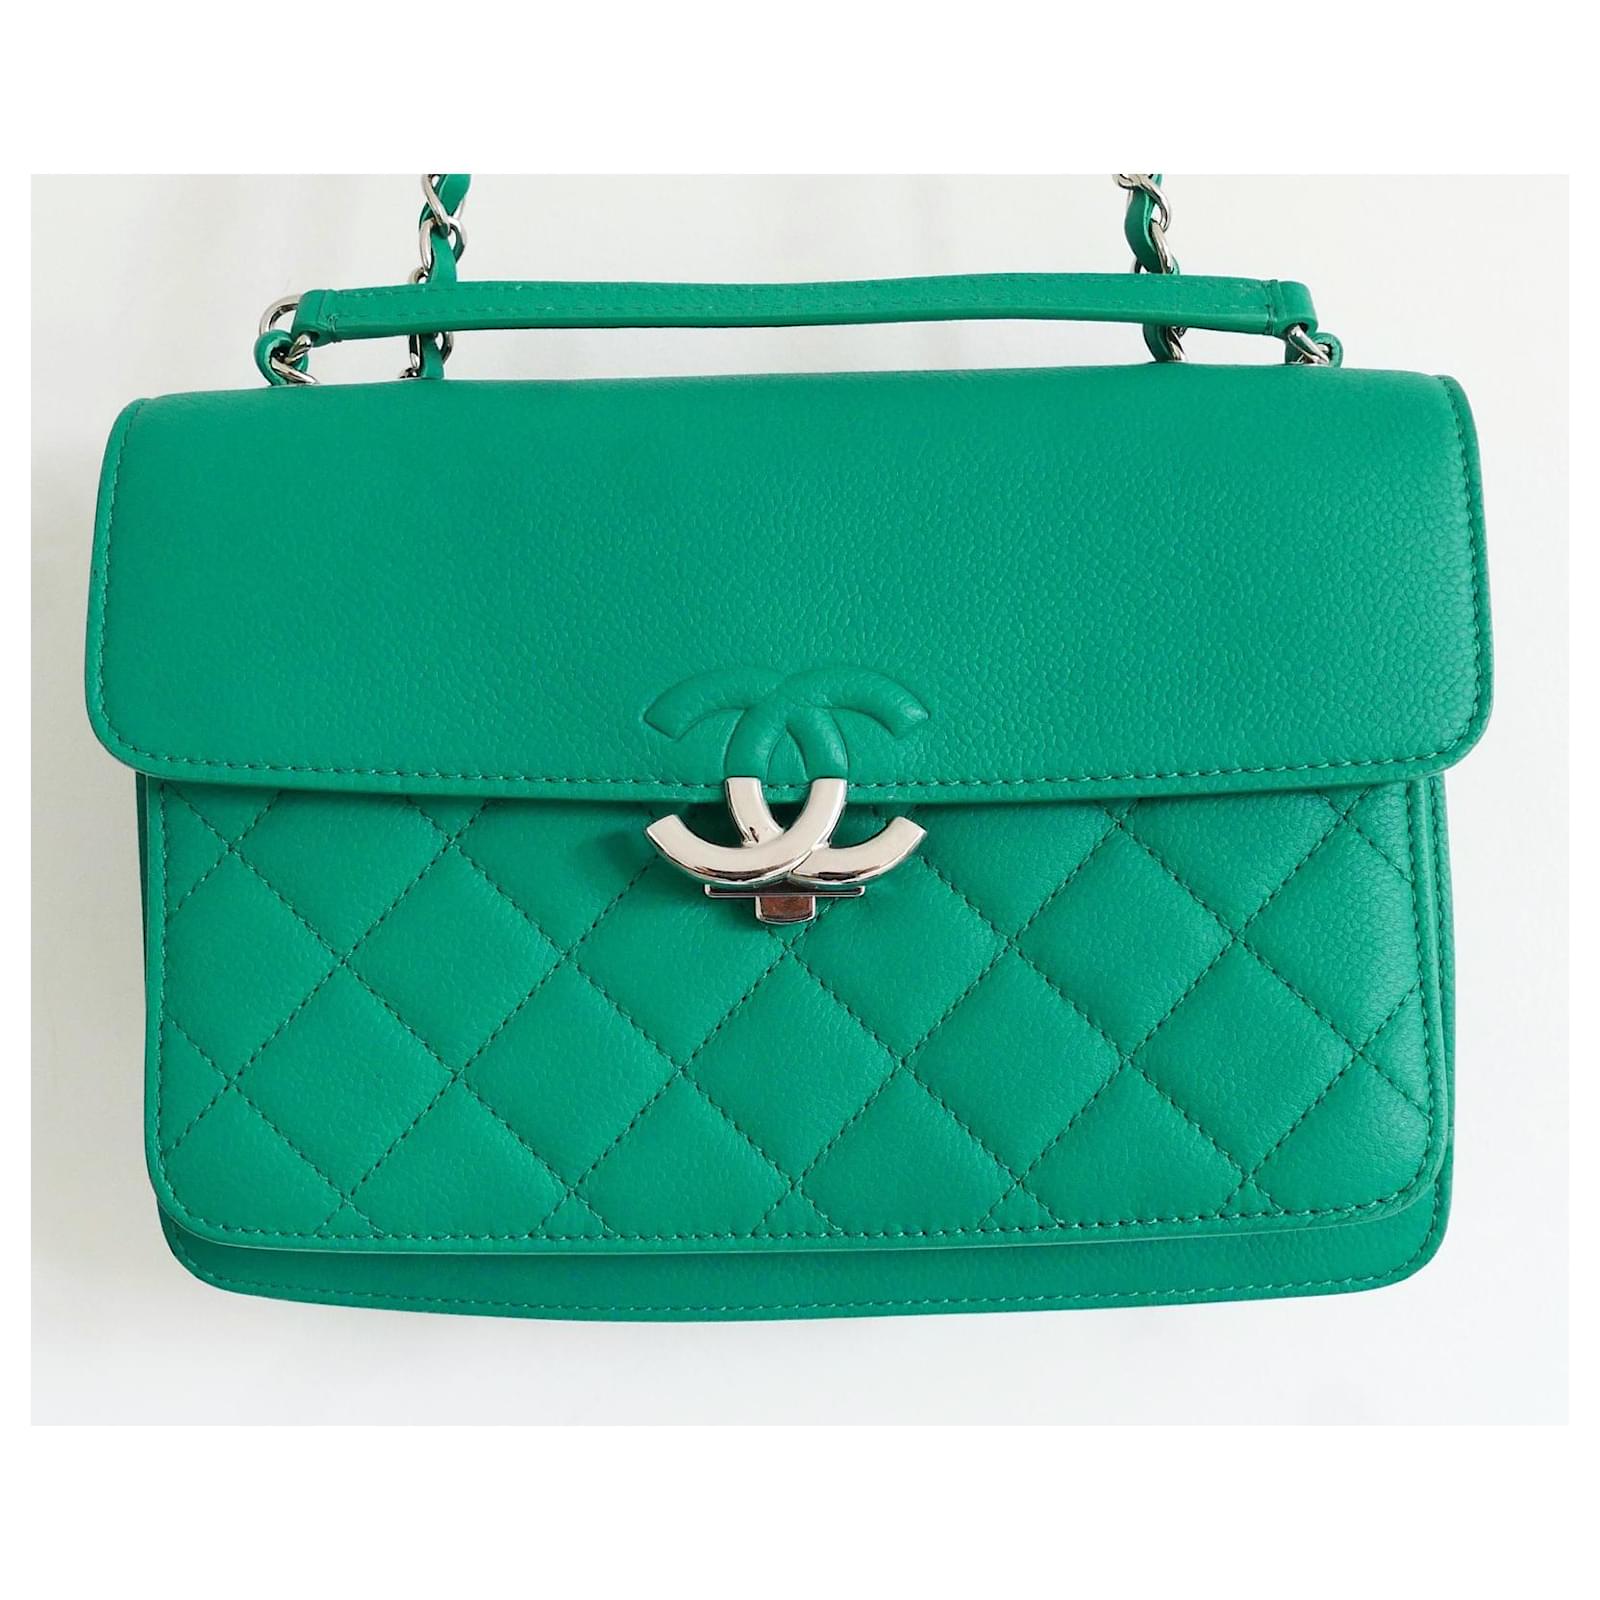 Handbags Chanel Chanel Mini Urban Companion Flap Bag